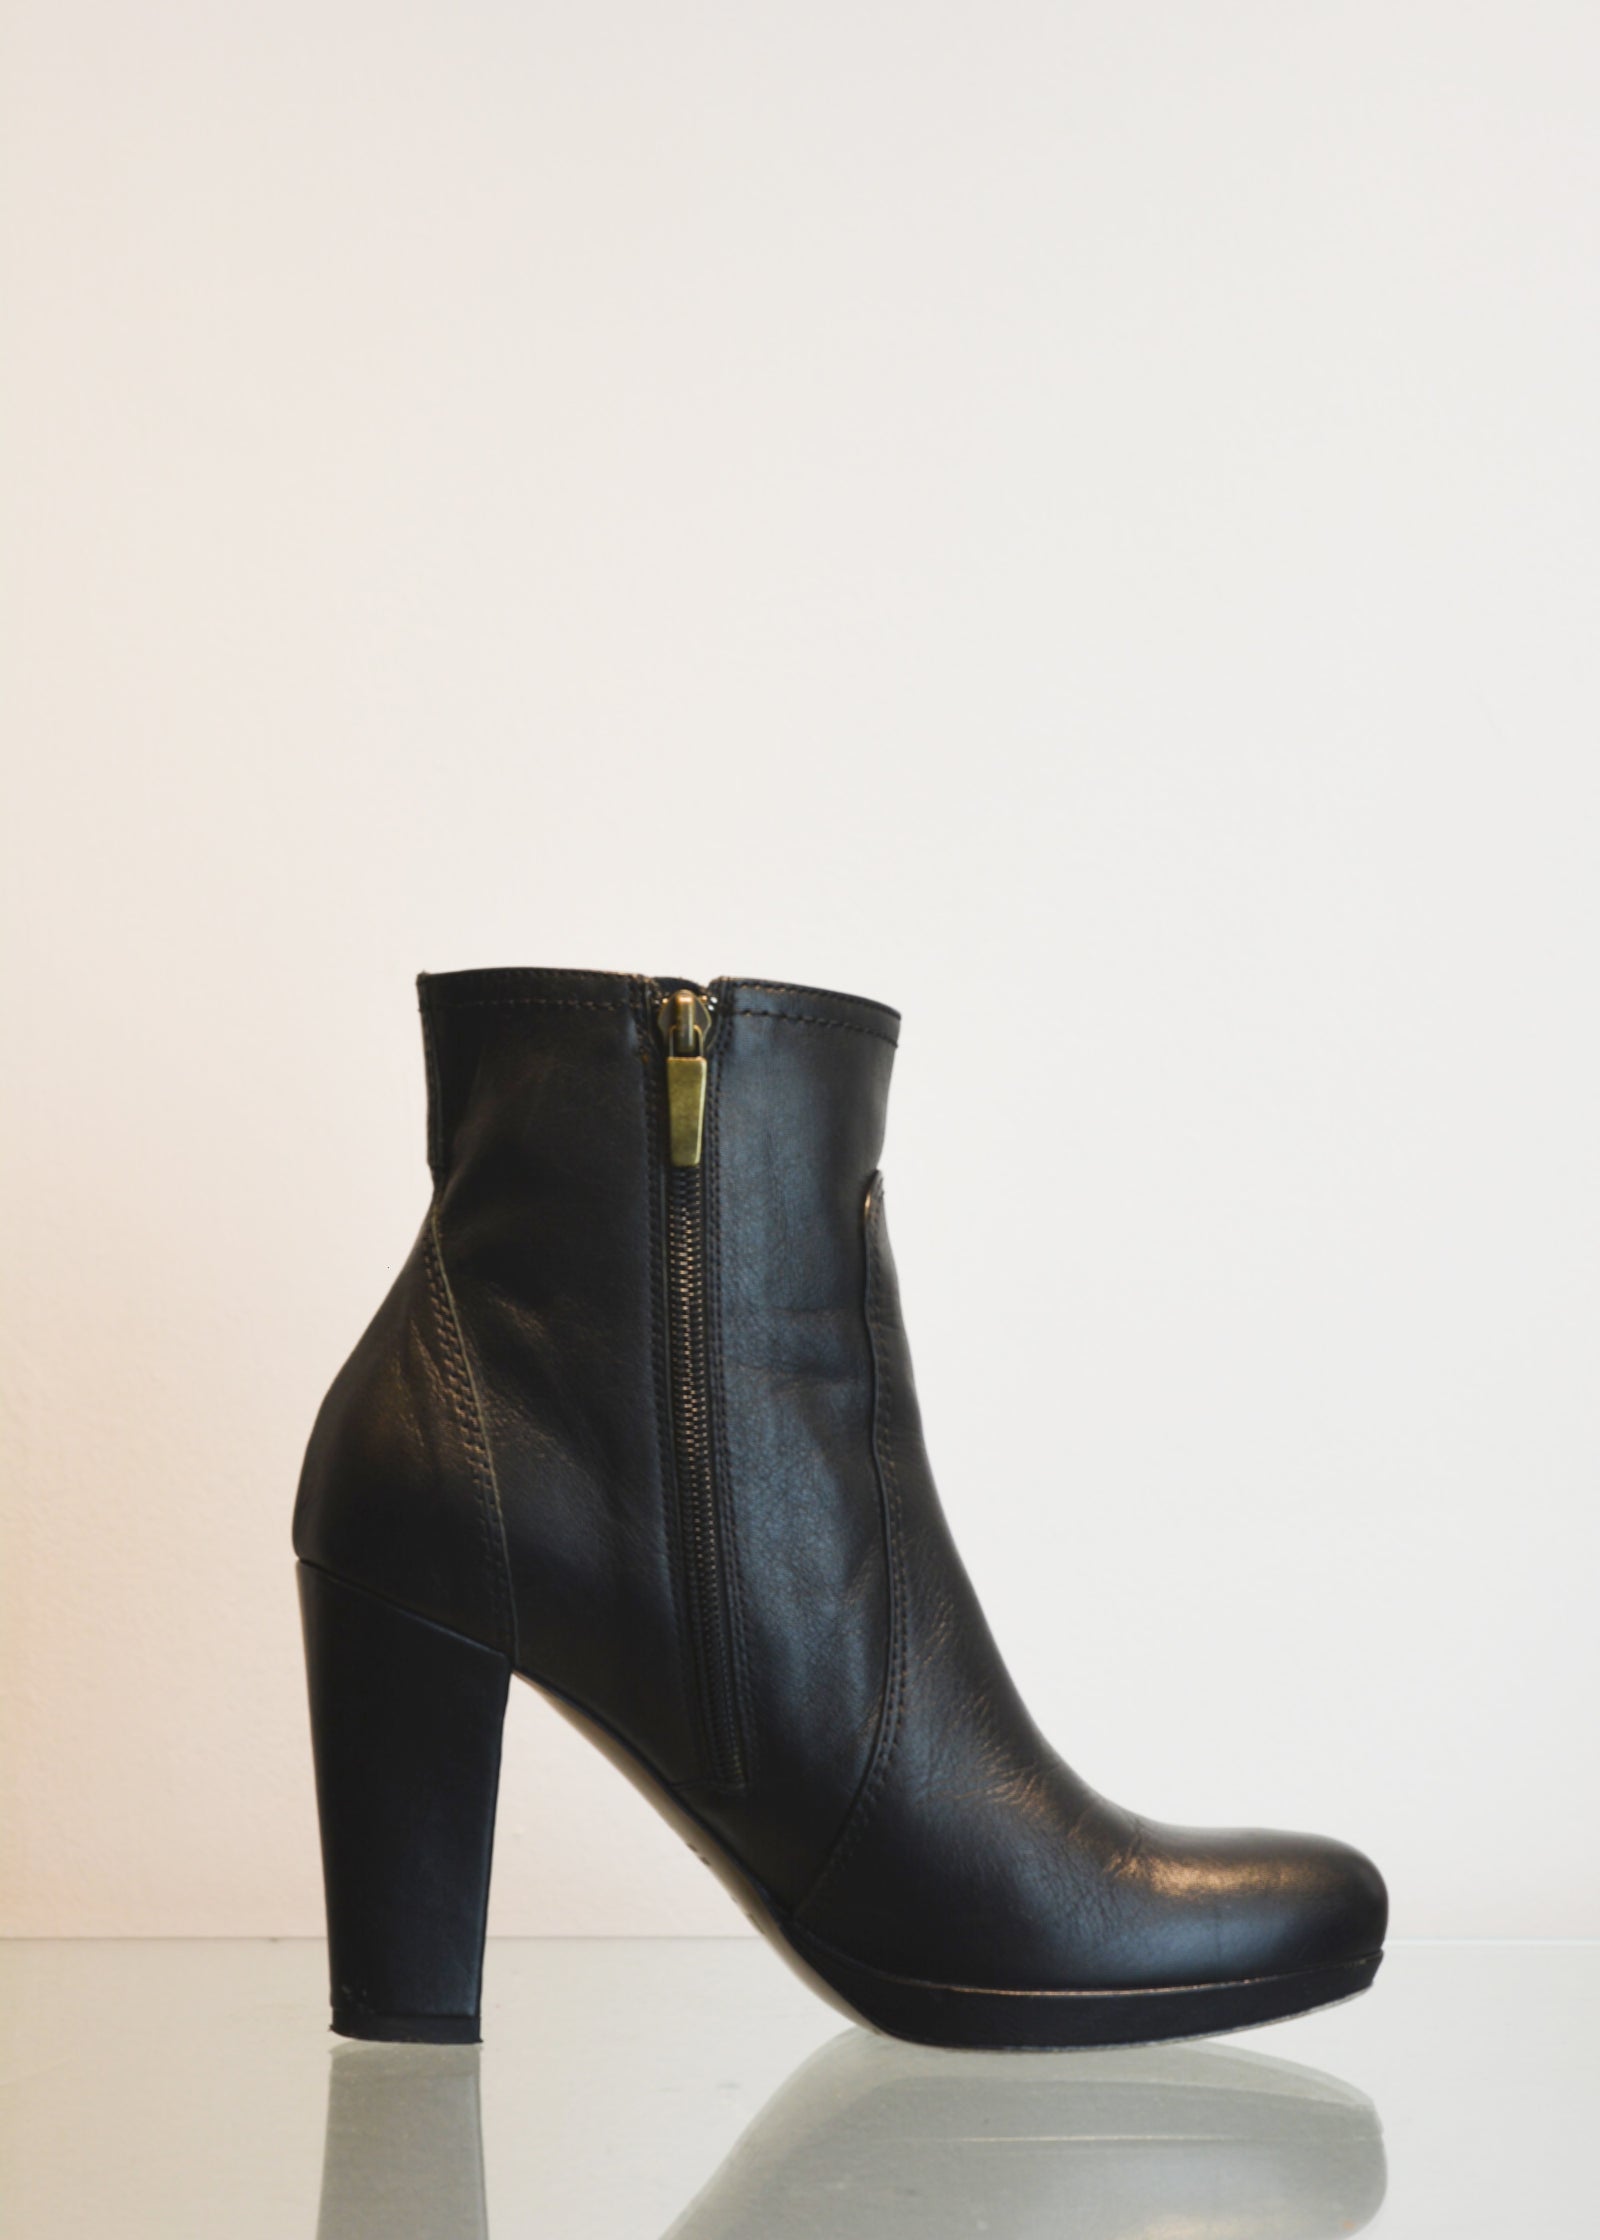 PREWORN | Preloved - 'HOBBS' Ankle Boot - Size 5 UK